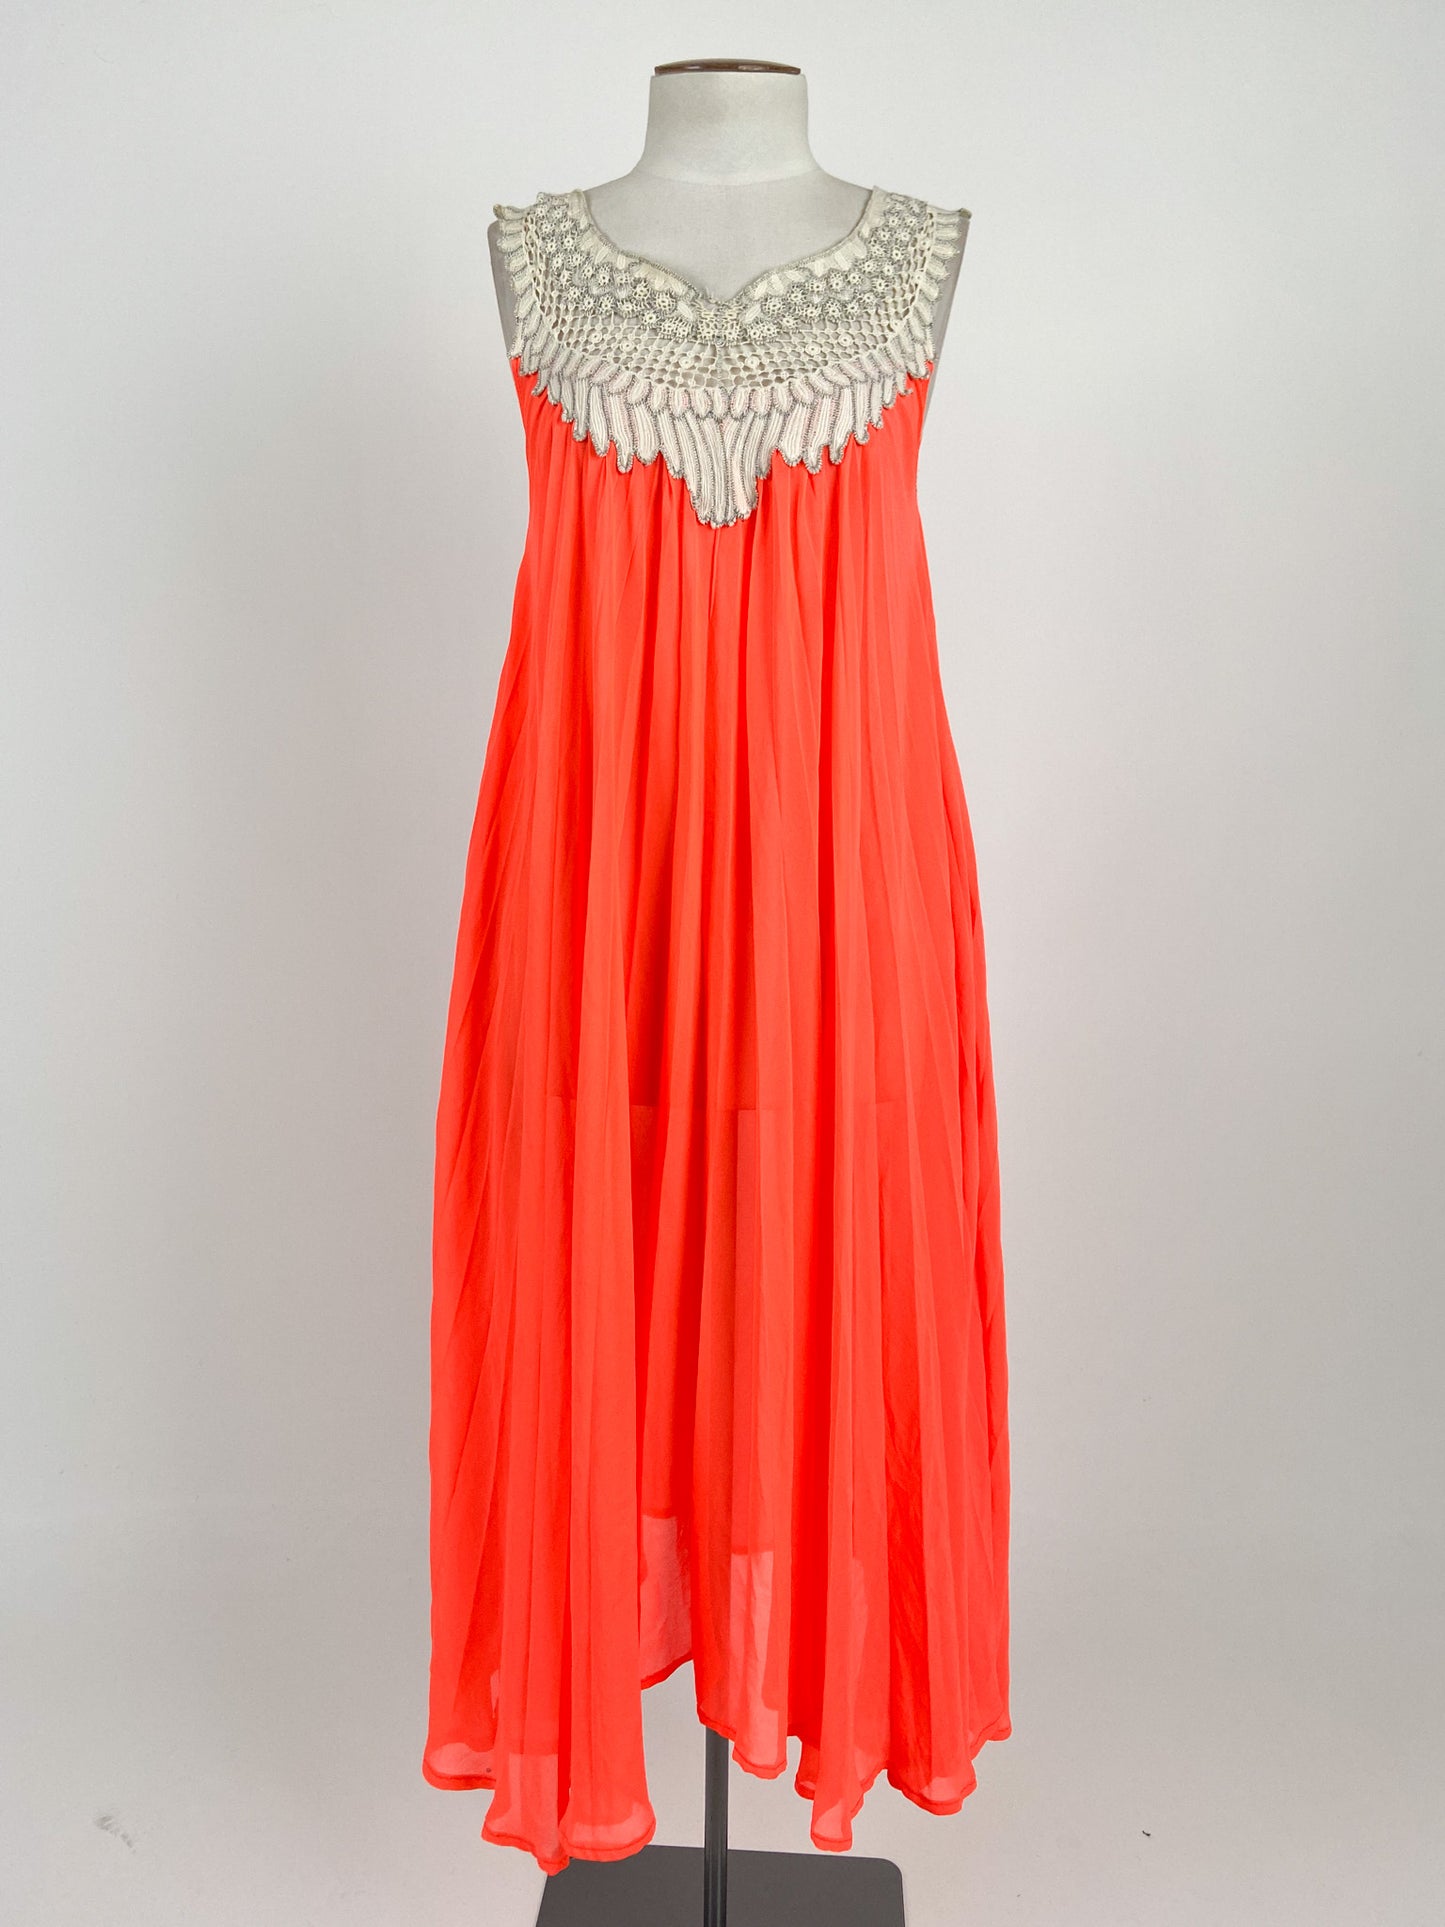 Andrea Moore | Orange Cocktail Dress | Size S